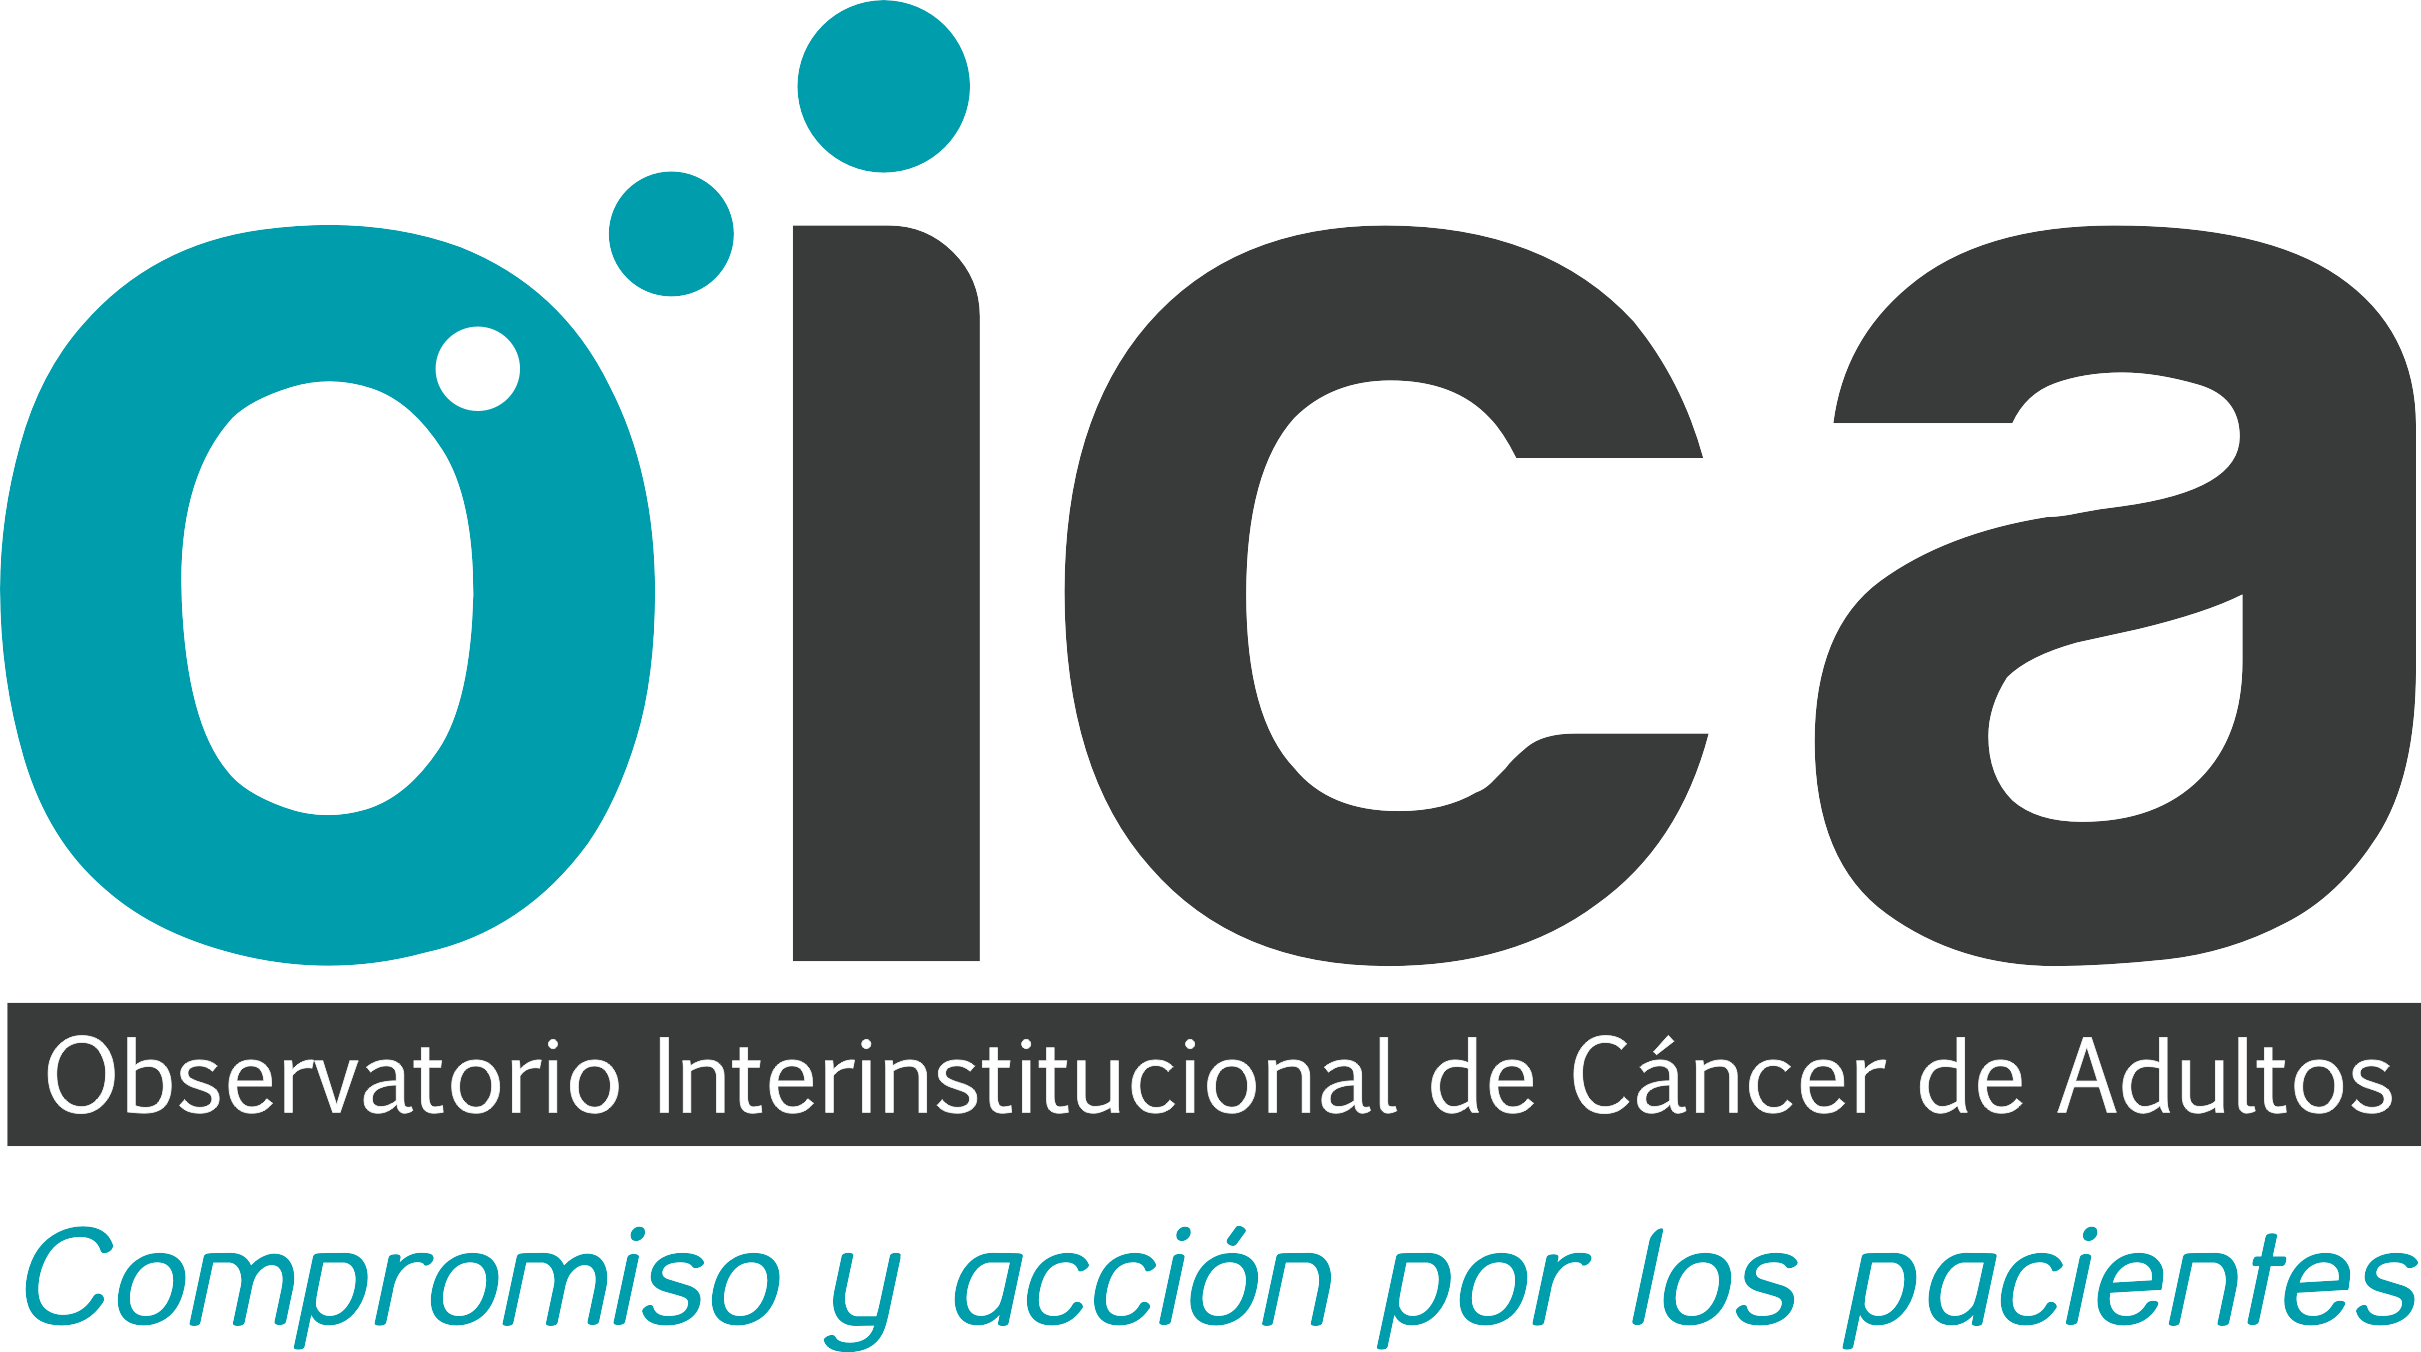 OICA | Observatorio Interinstitucional de Cáncer de Adultos